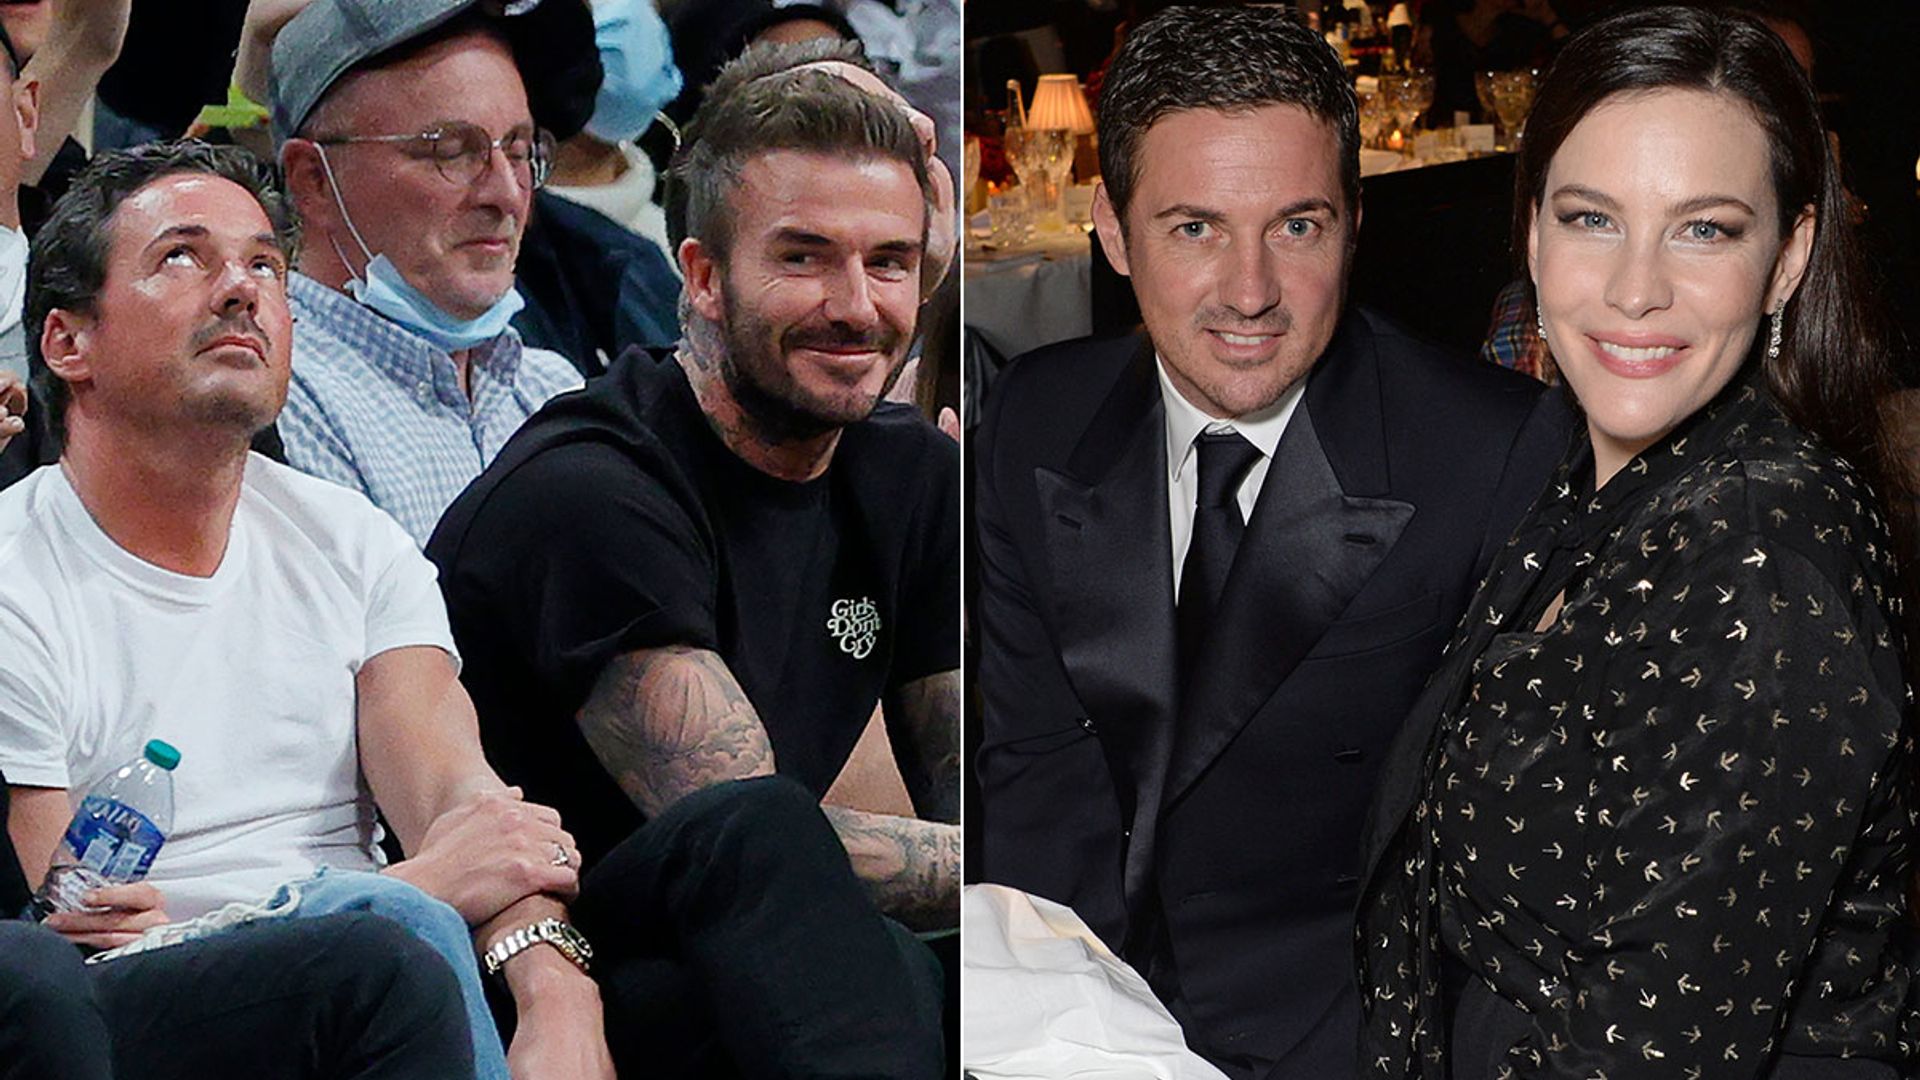 David Beckham and Dave Gardner enjoy boys' night out after split from Liv Tyler is revealed